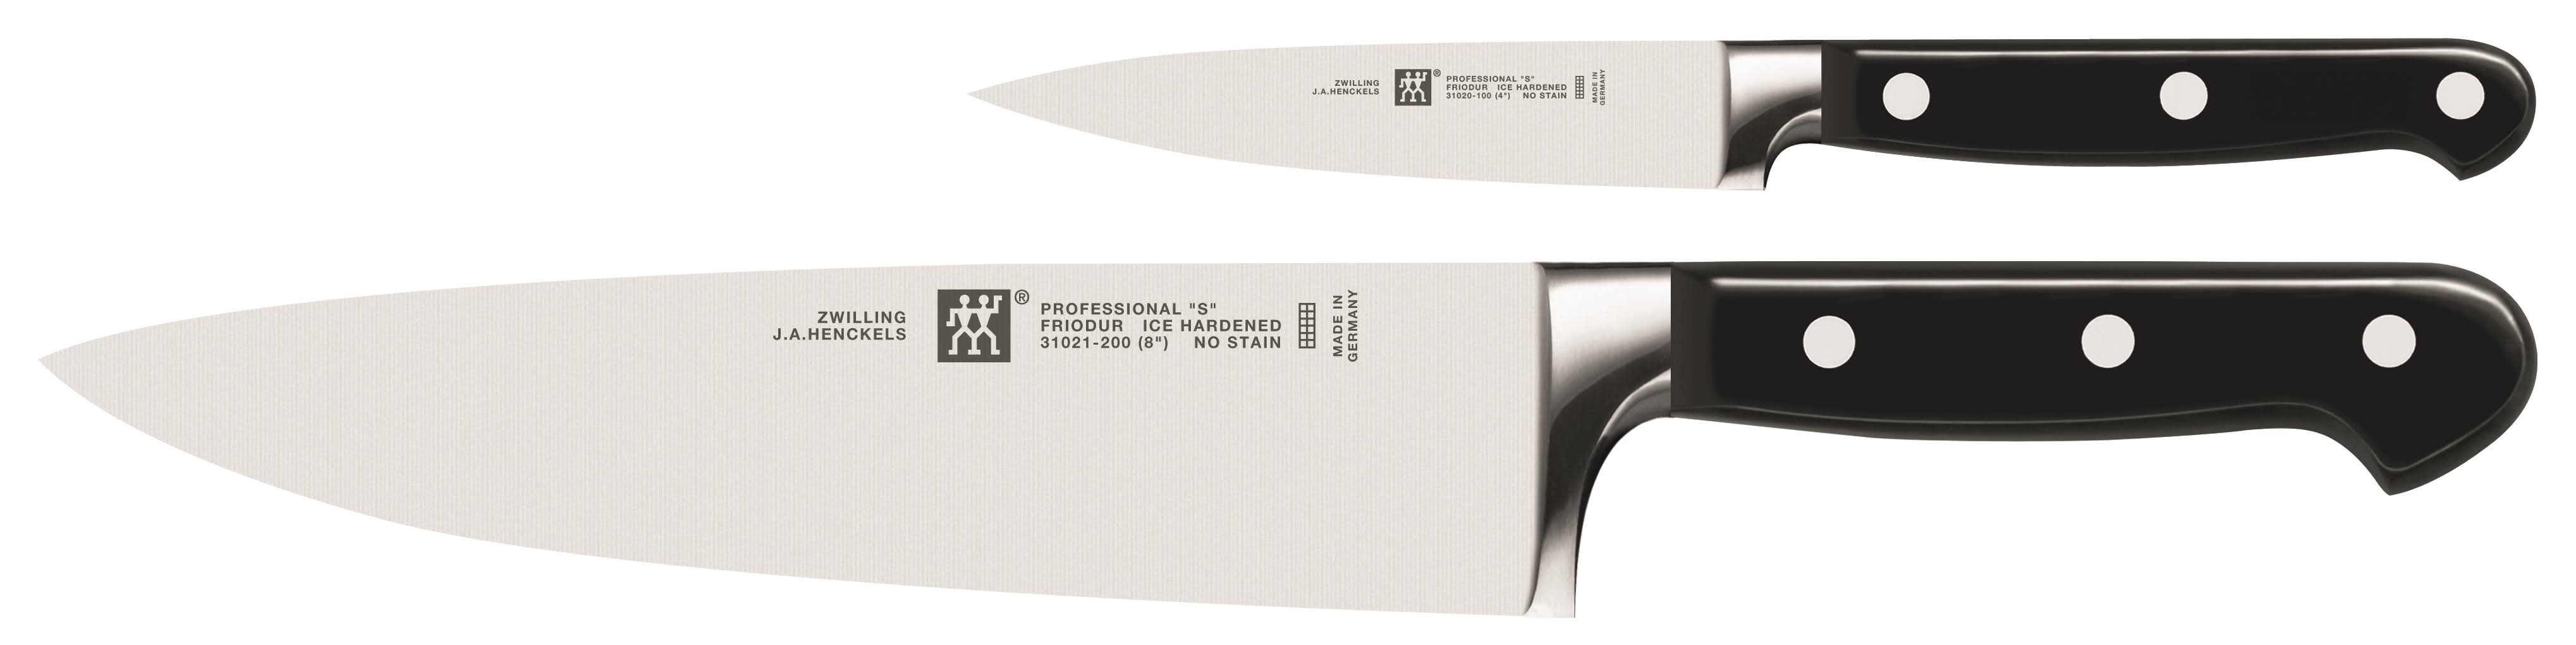 Zwilling Set coltelli professionale S, 2 pz. (Spick & Chef's knife)